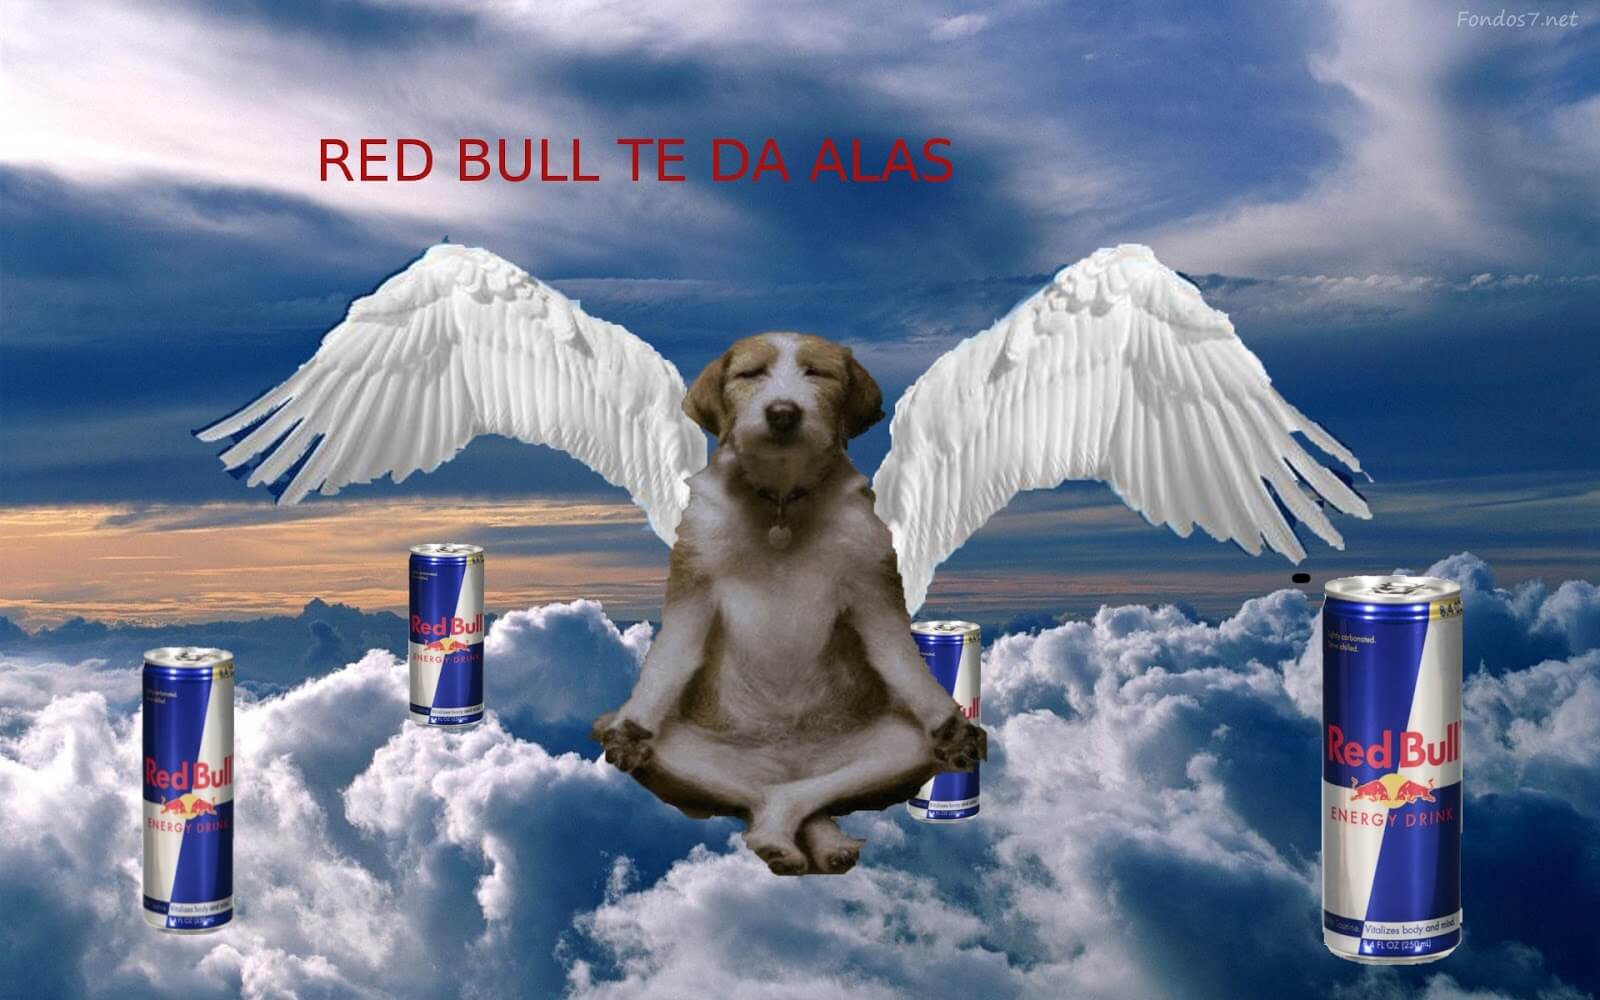 “Te da alas”, de Red Bull